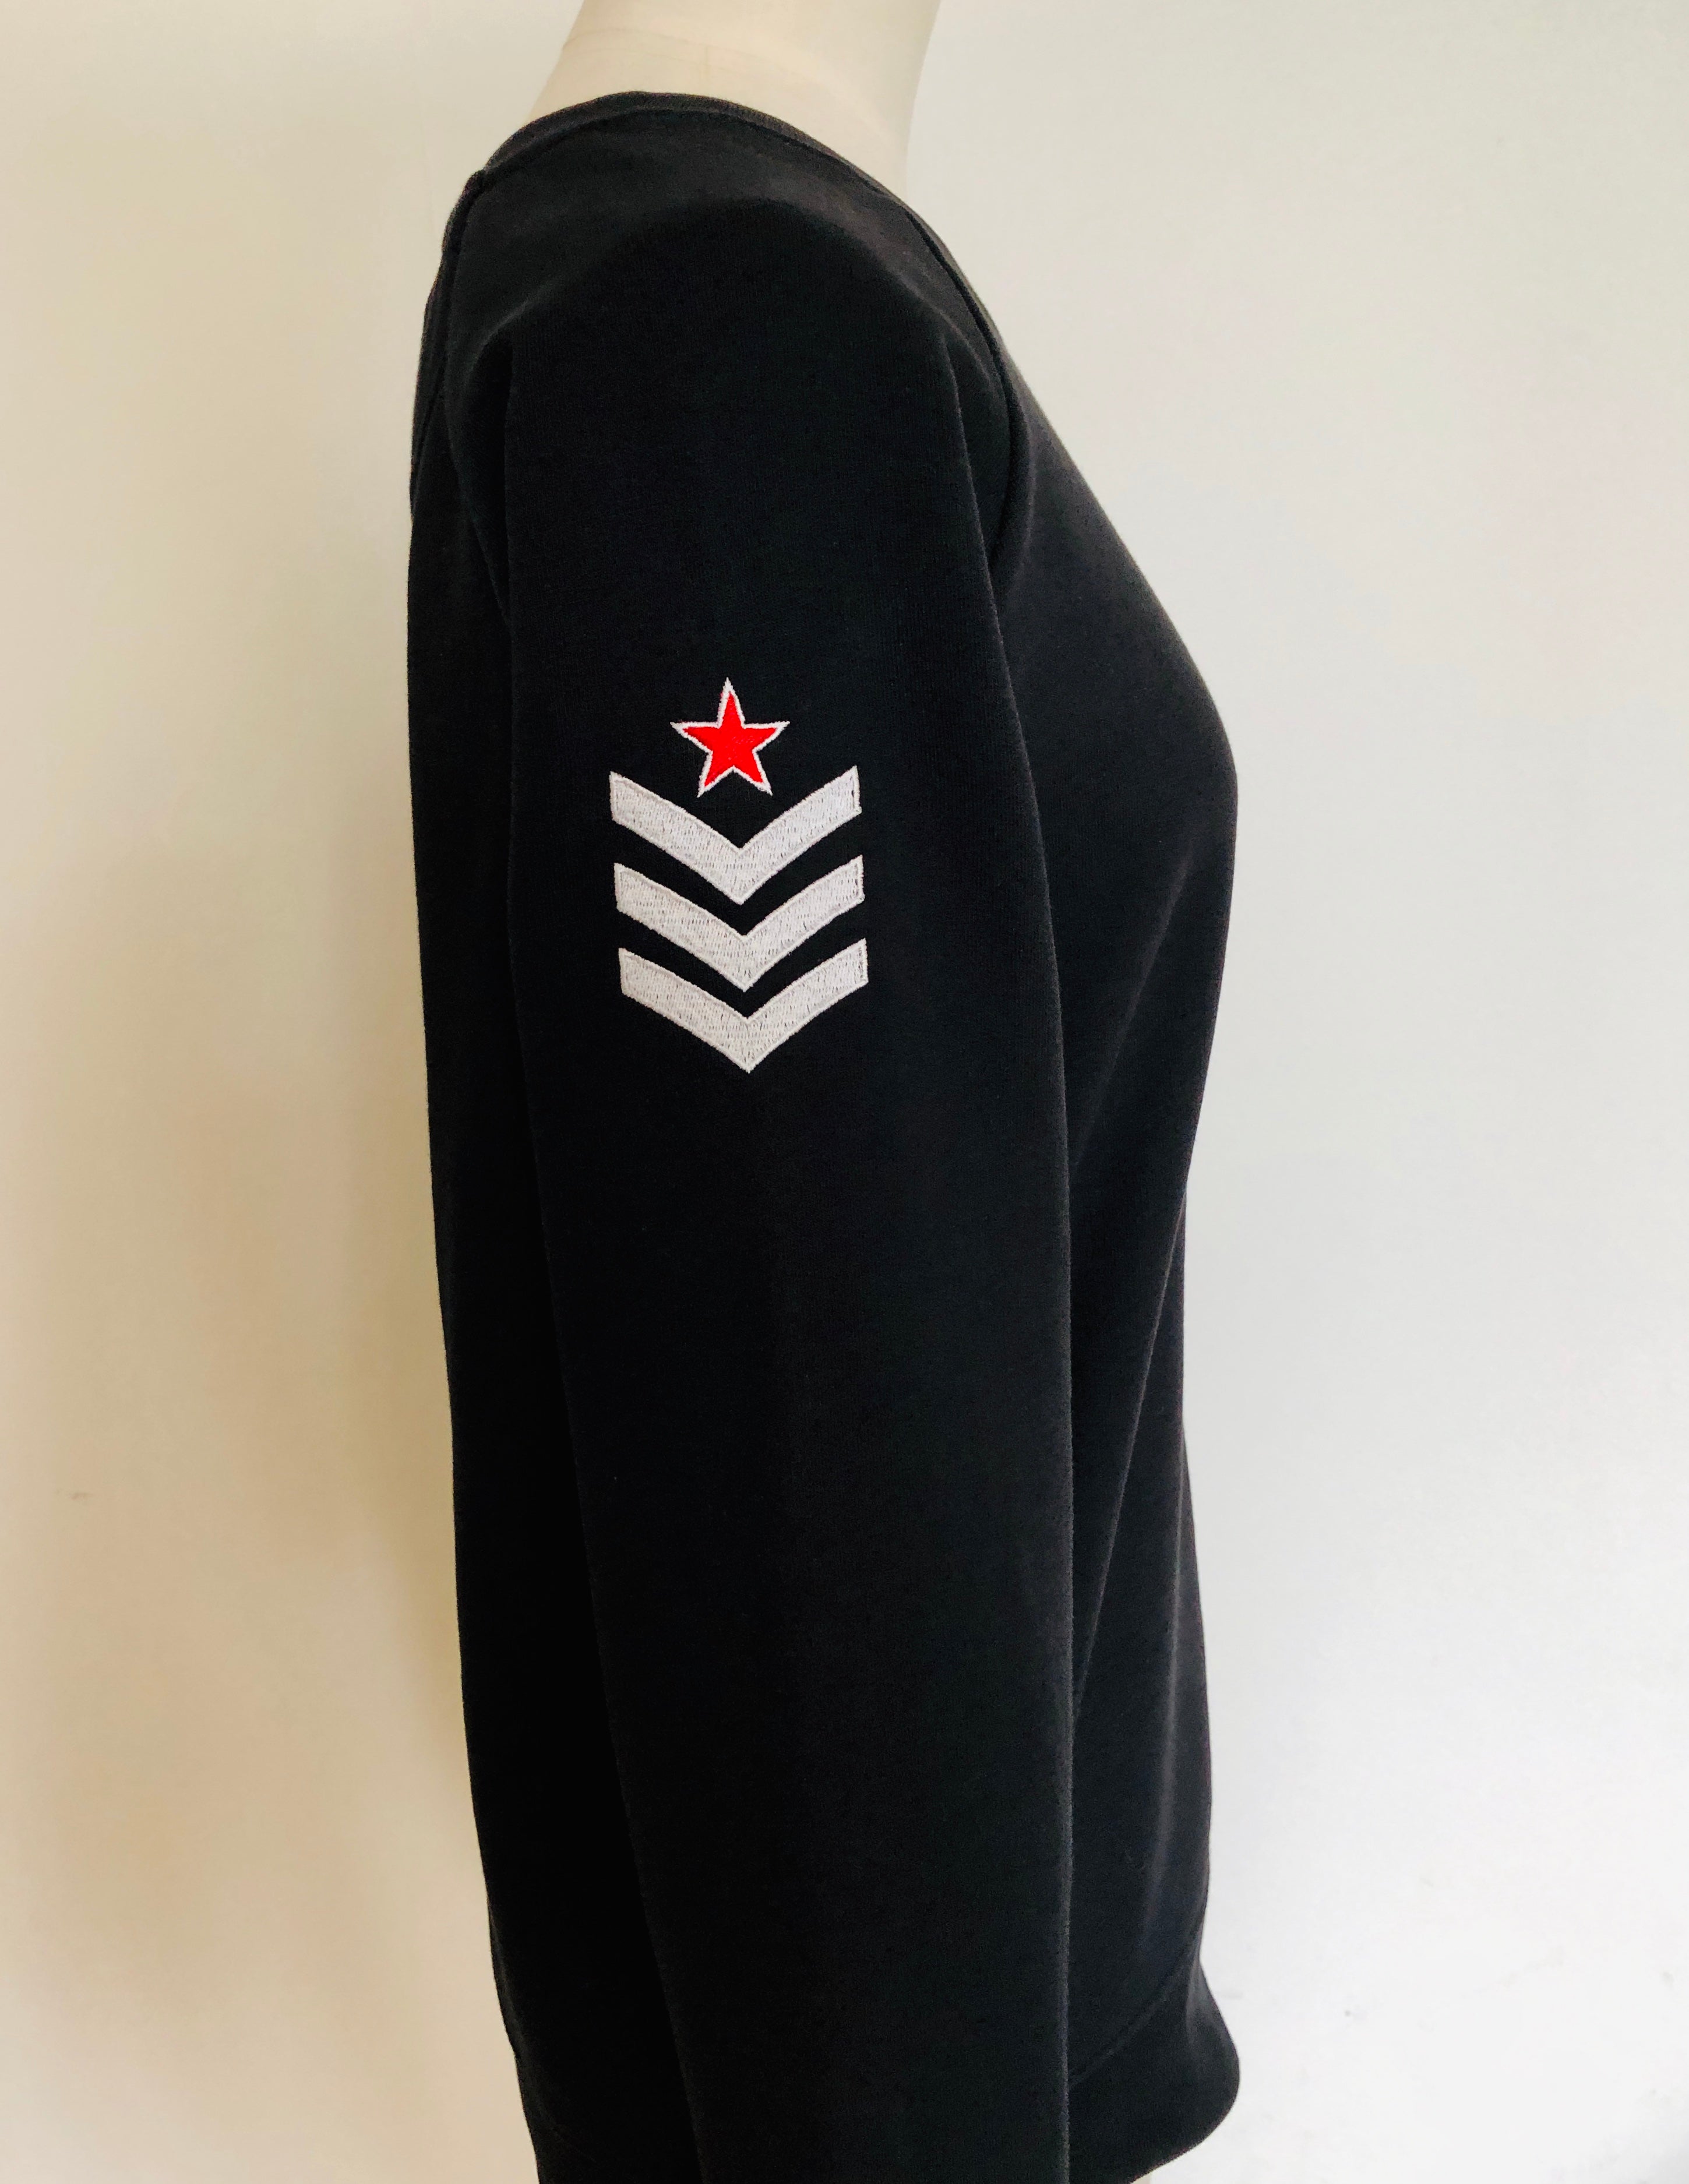 Black Military Sweatshirt - MADE TO ORDER